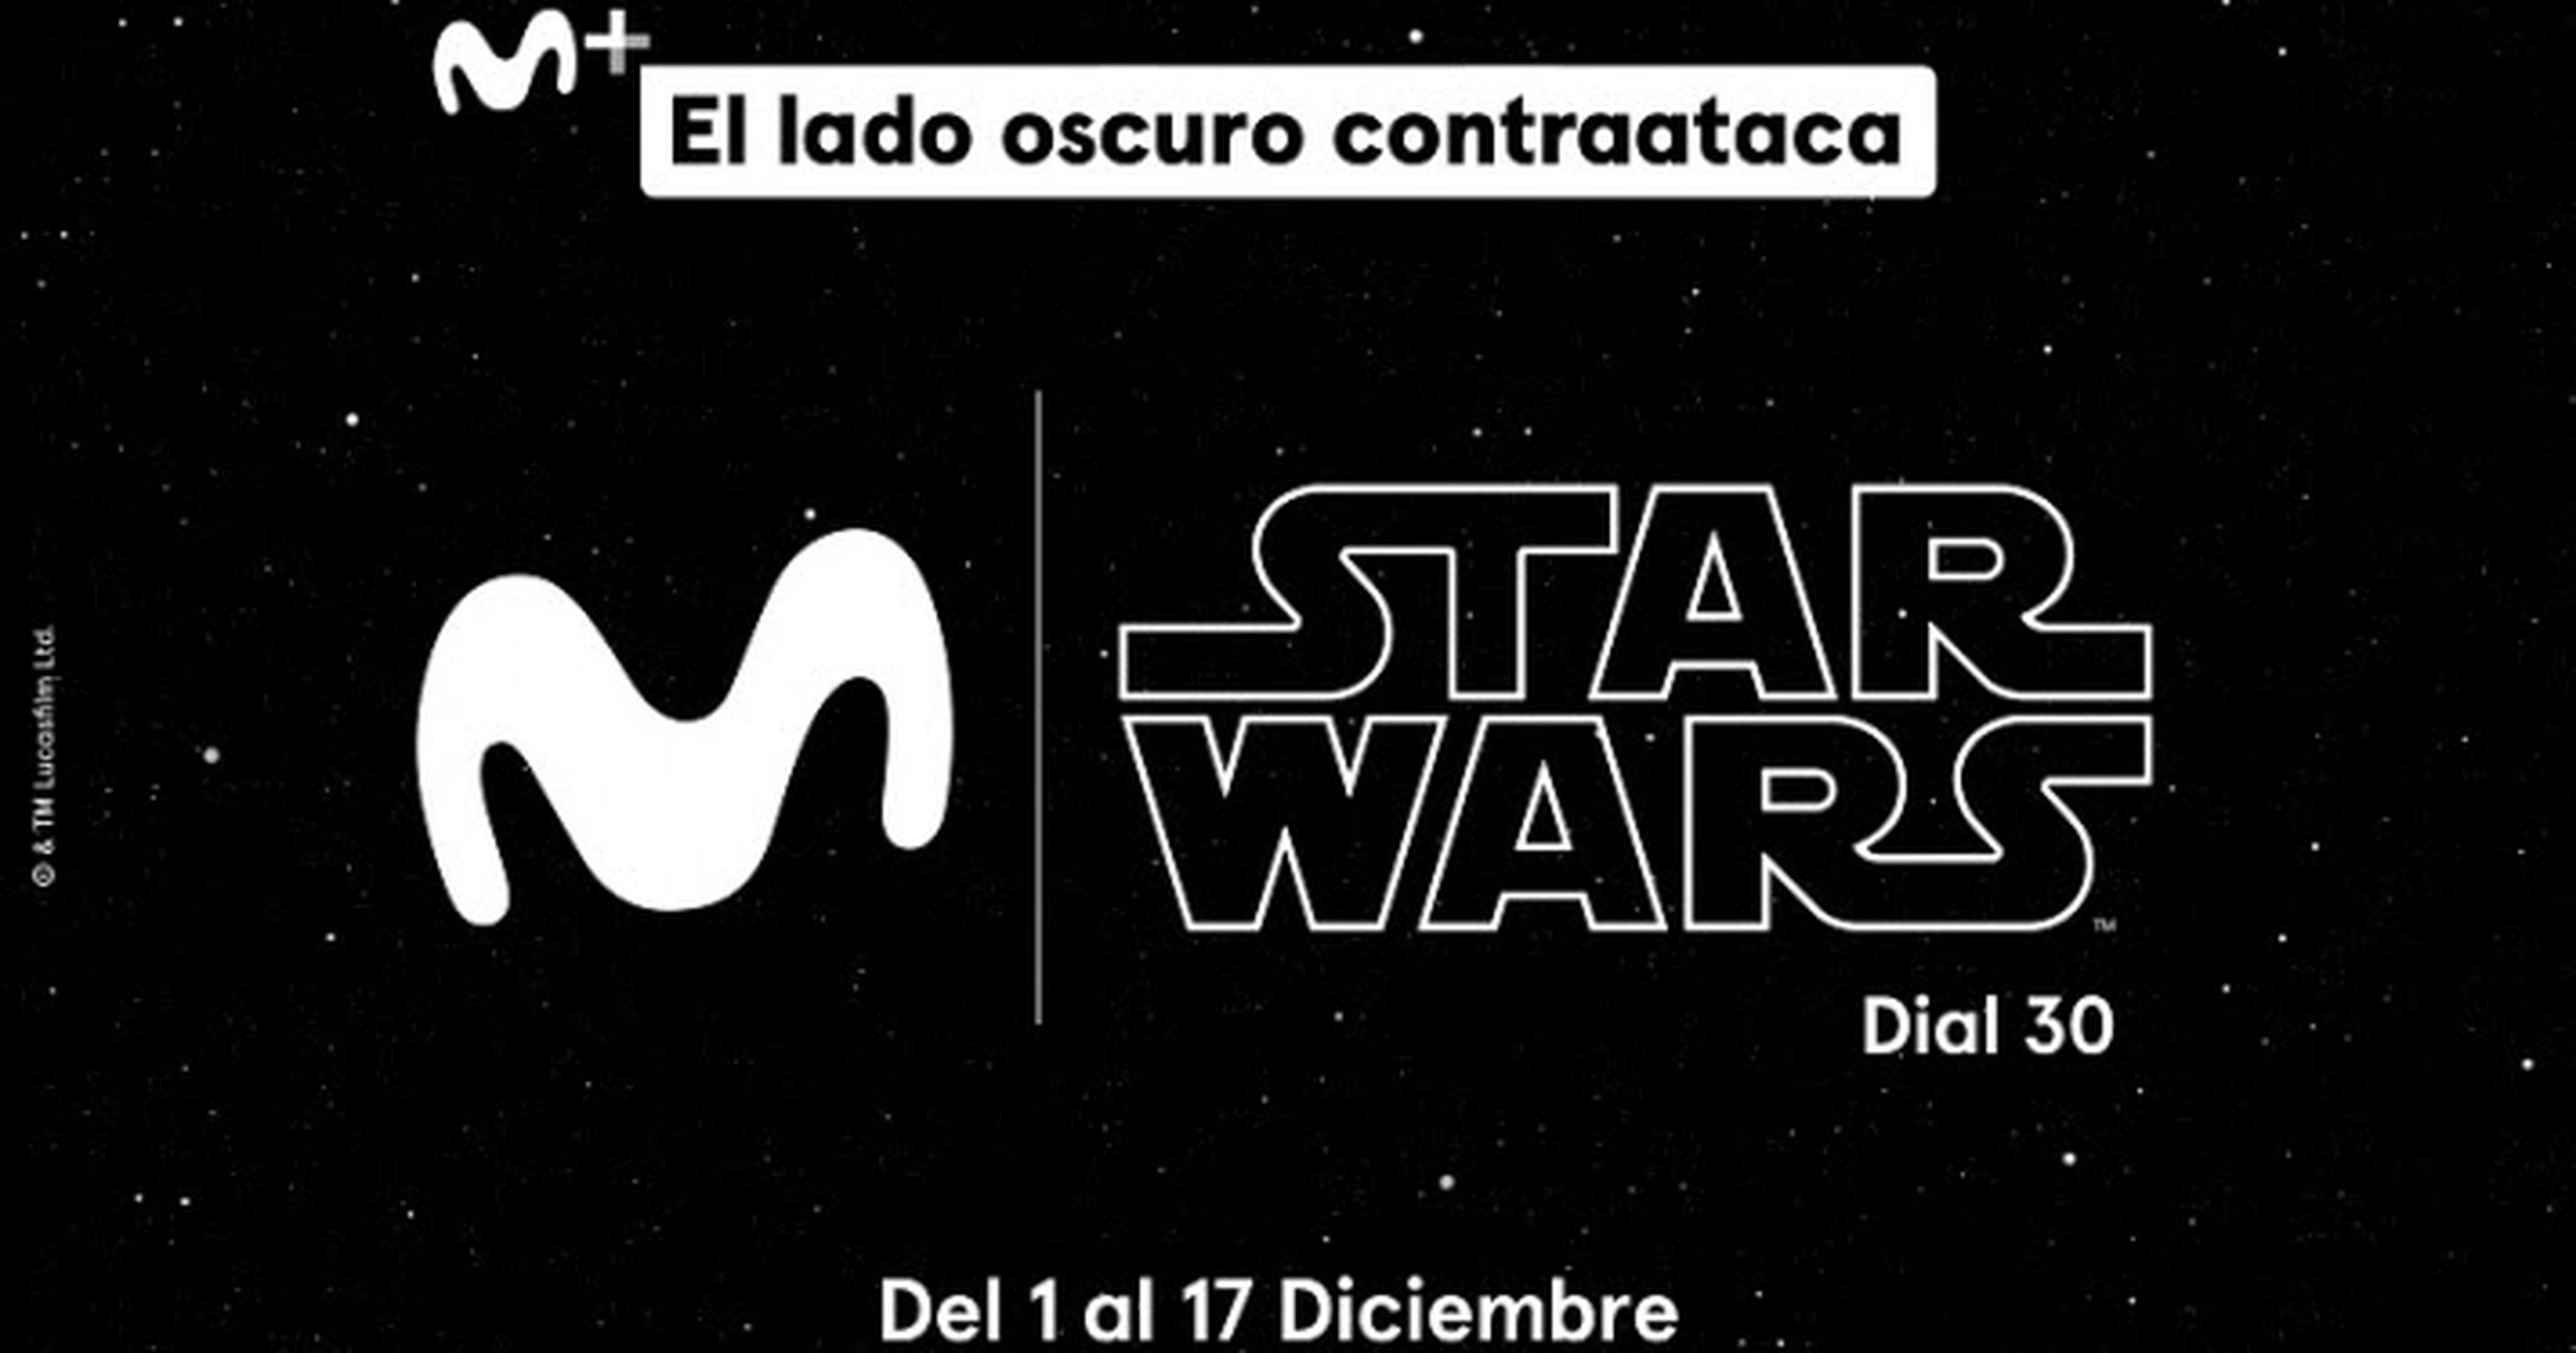 Movistar Star Wars